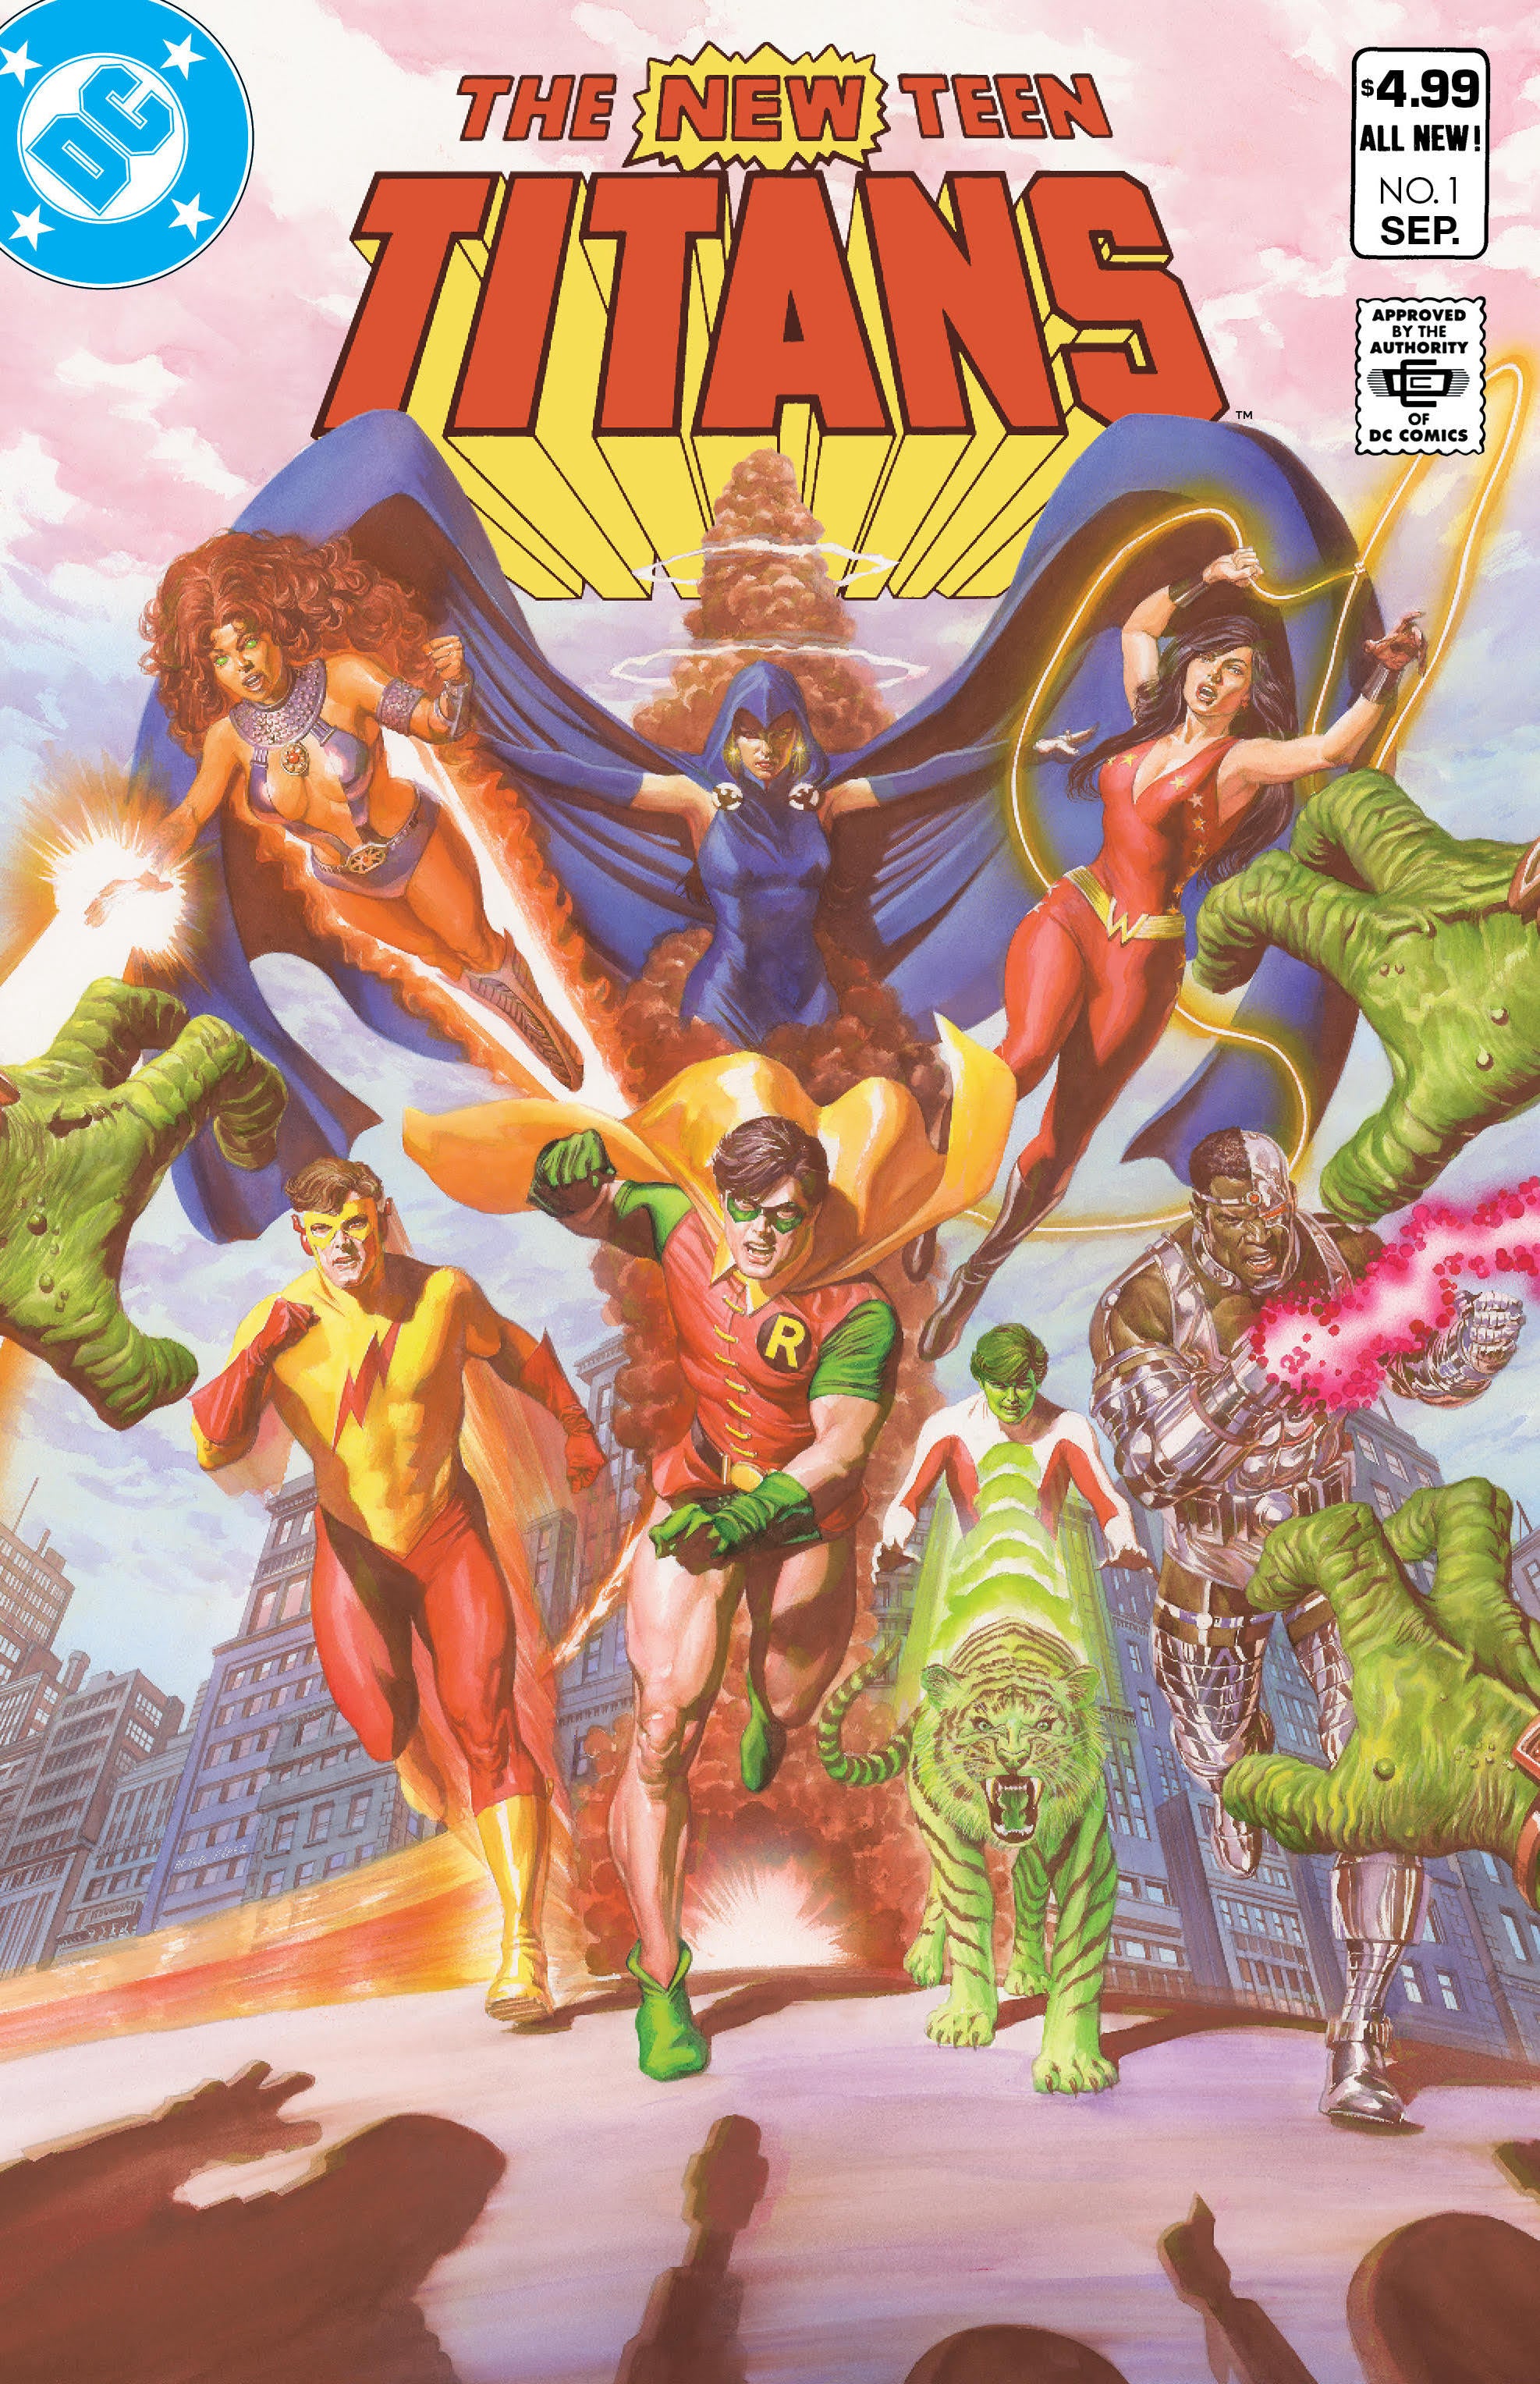 comic book cover art